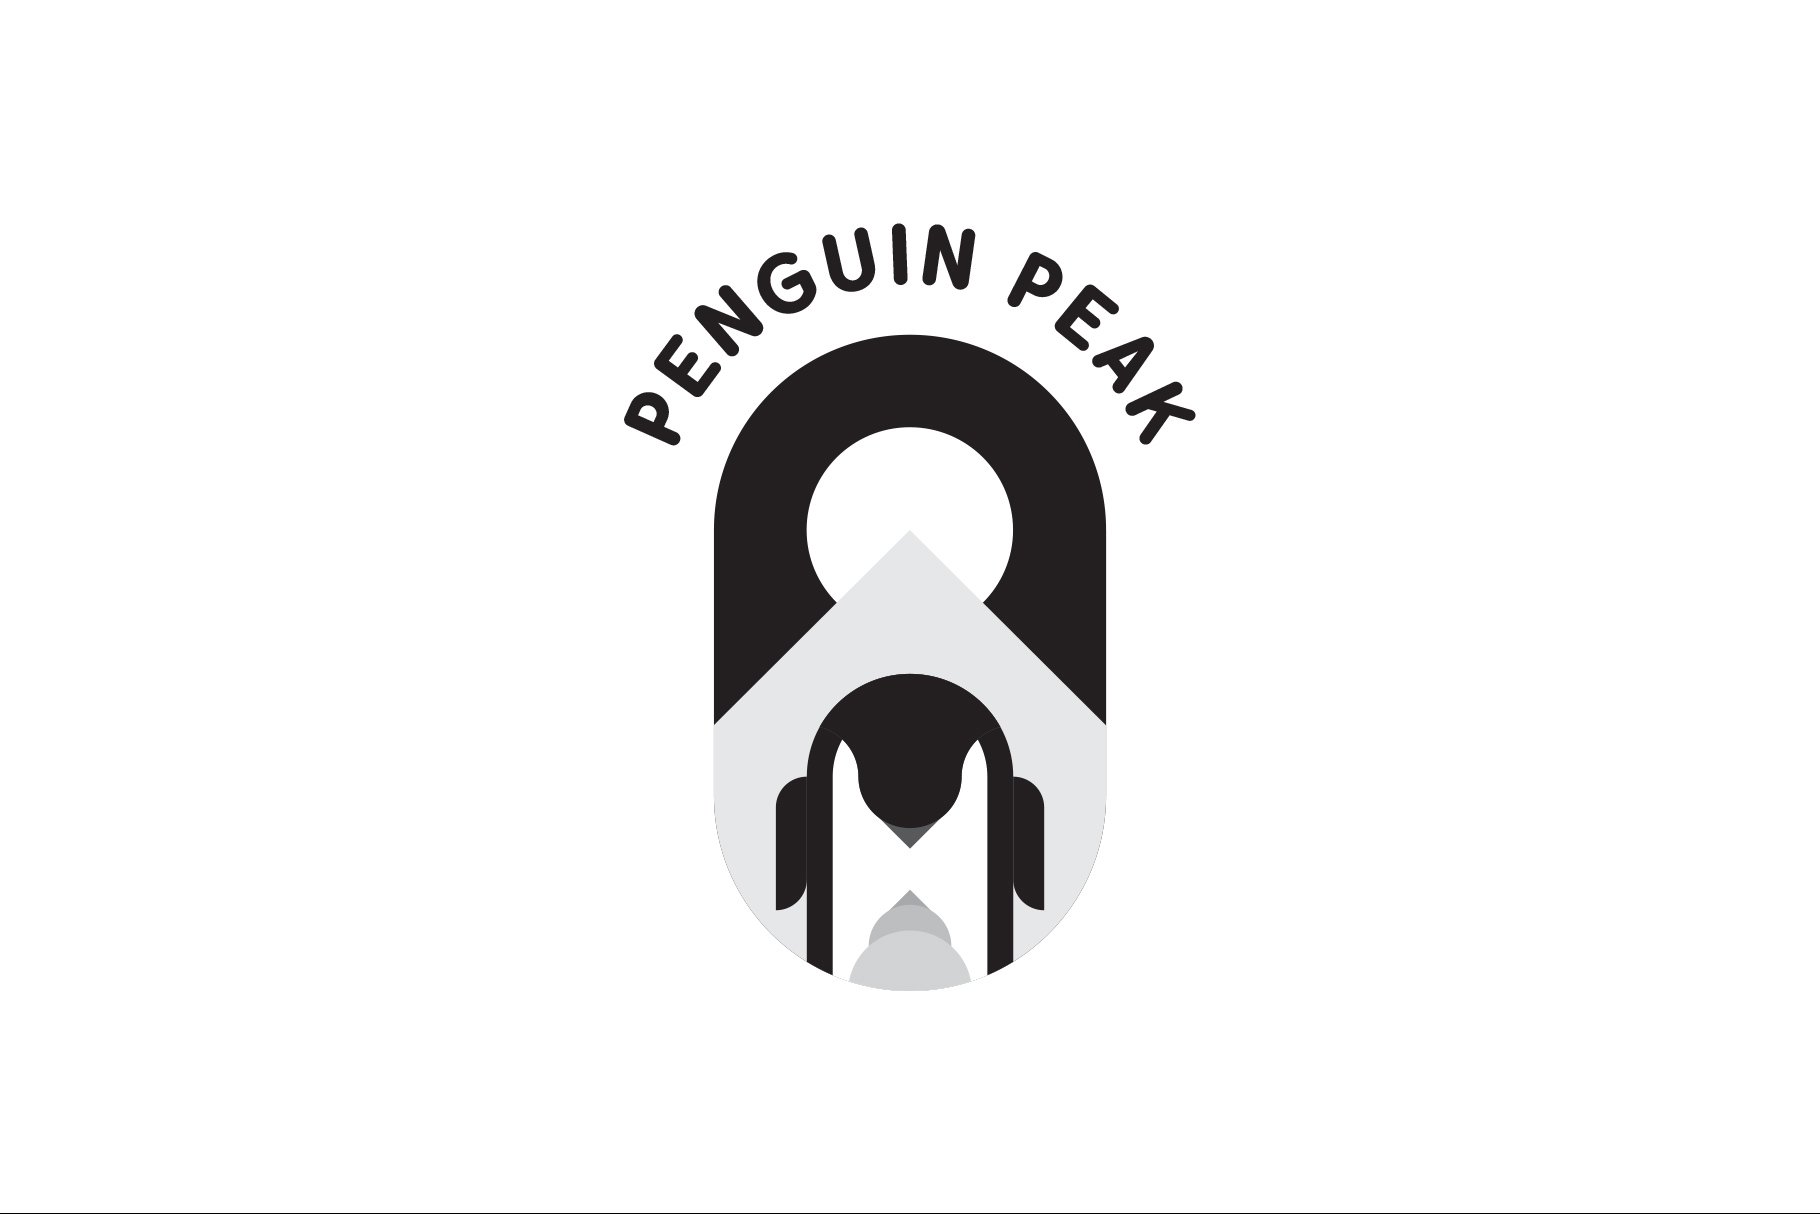 Penguin Peak Logo preview image.